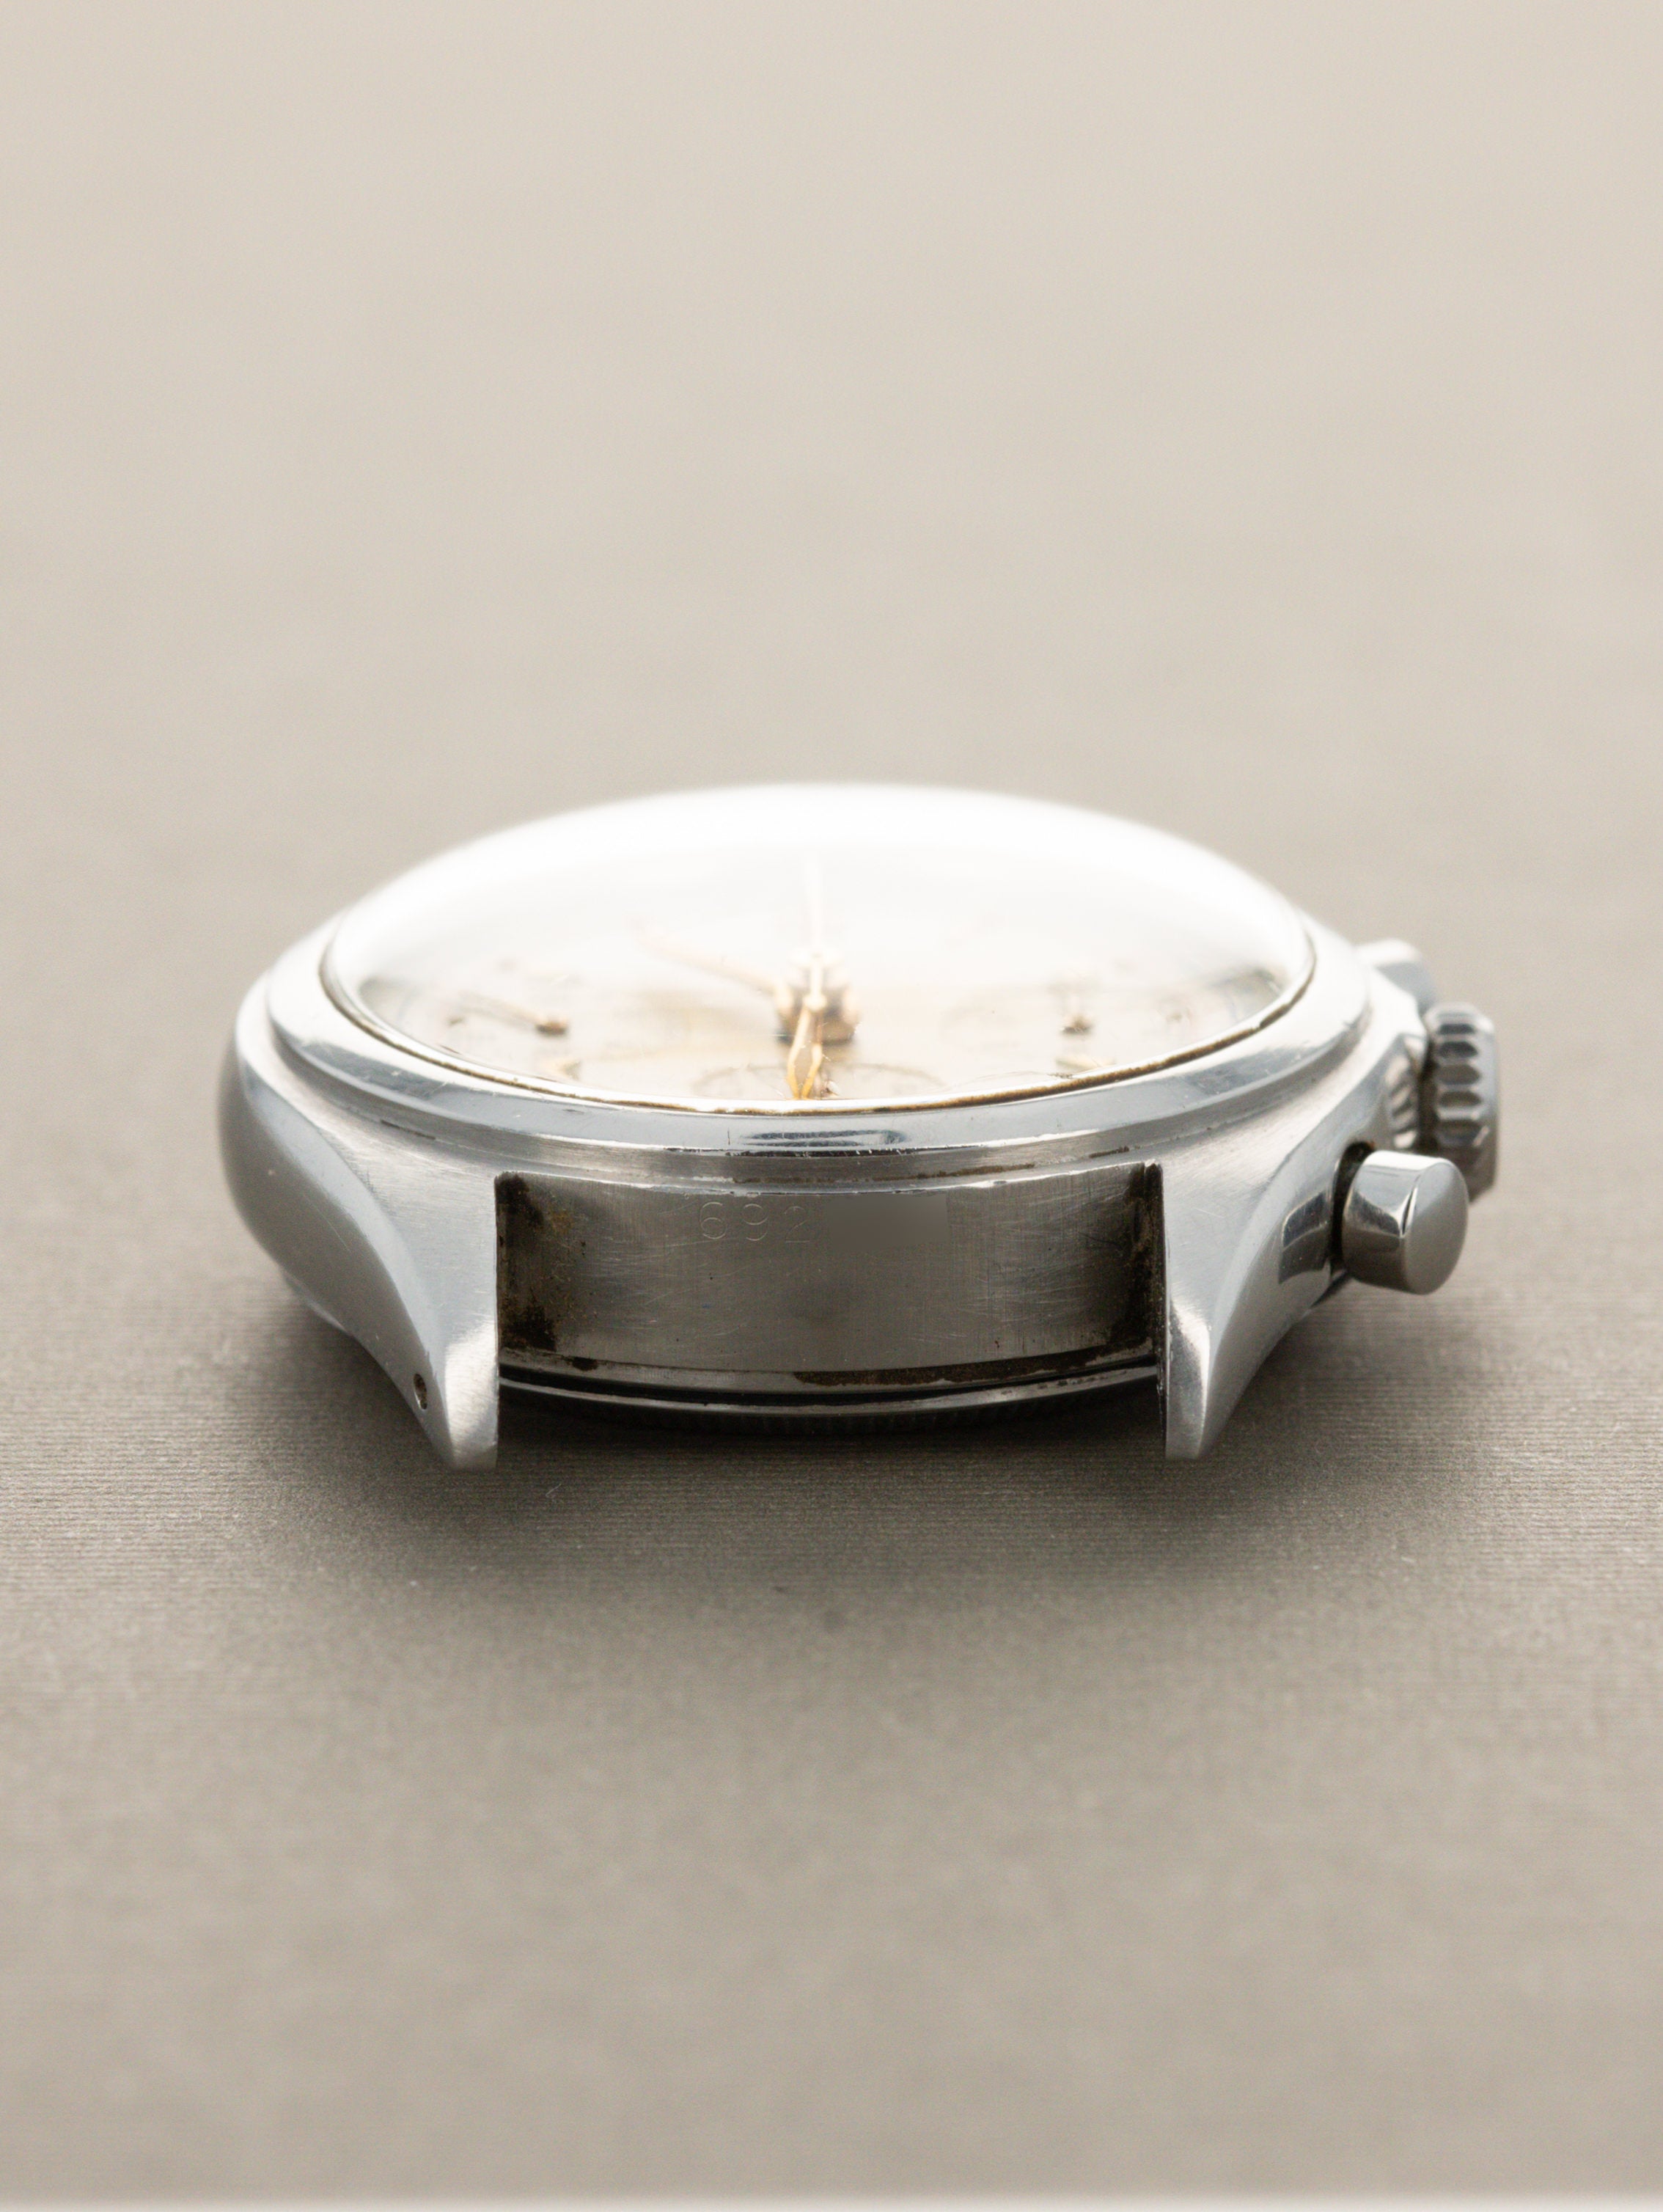 Rolex Oyster Chronograph Ref. 6034 - 'Pre-Daytona'